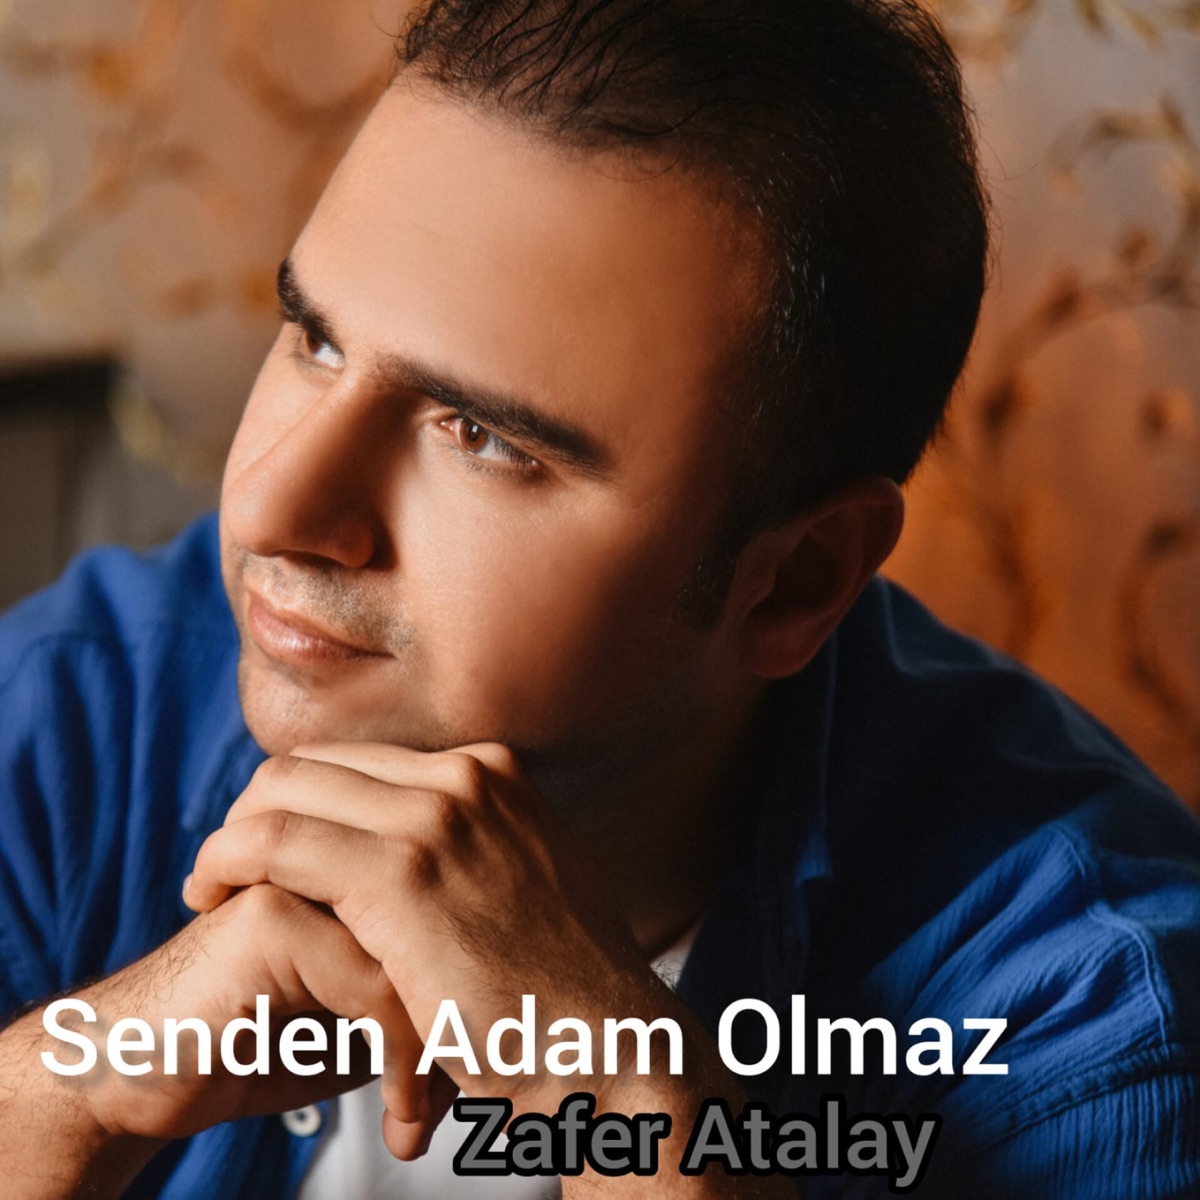 Senden Adam Olmaz - Single - Album by Zafer Atalay - Apple Music